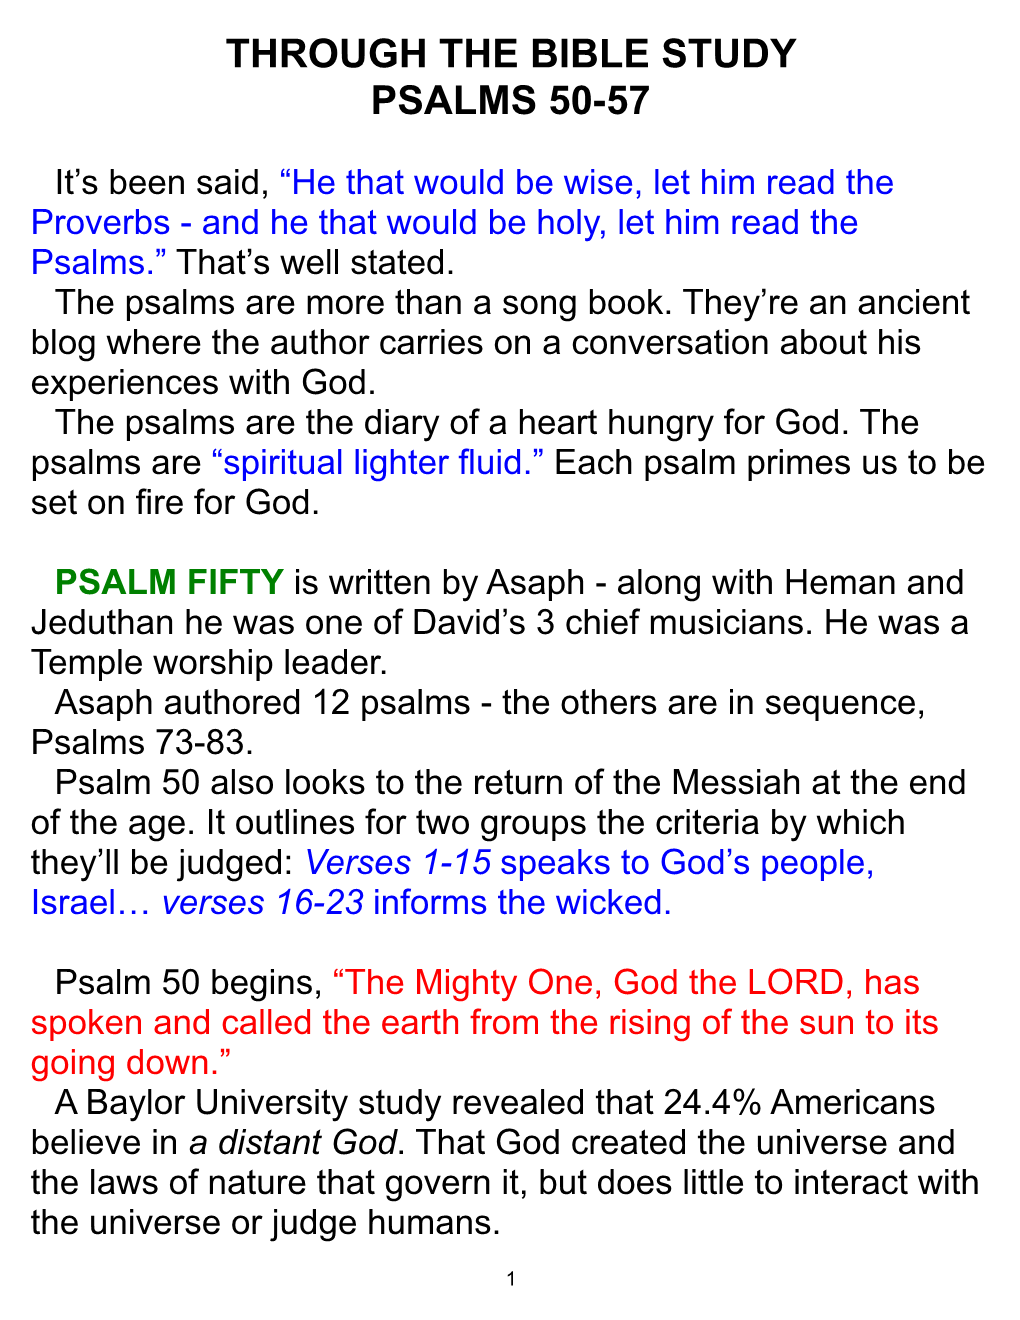 Through the Bible Study Psalms 50-57